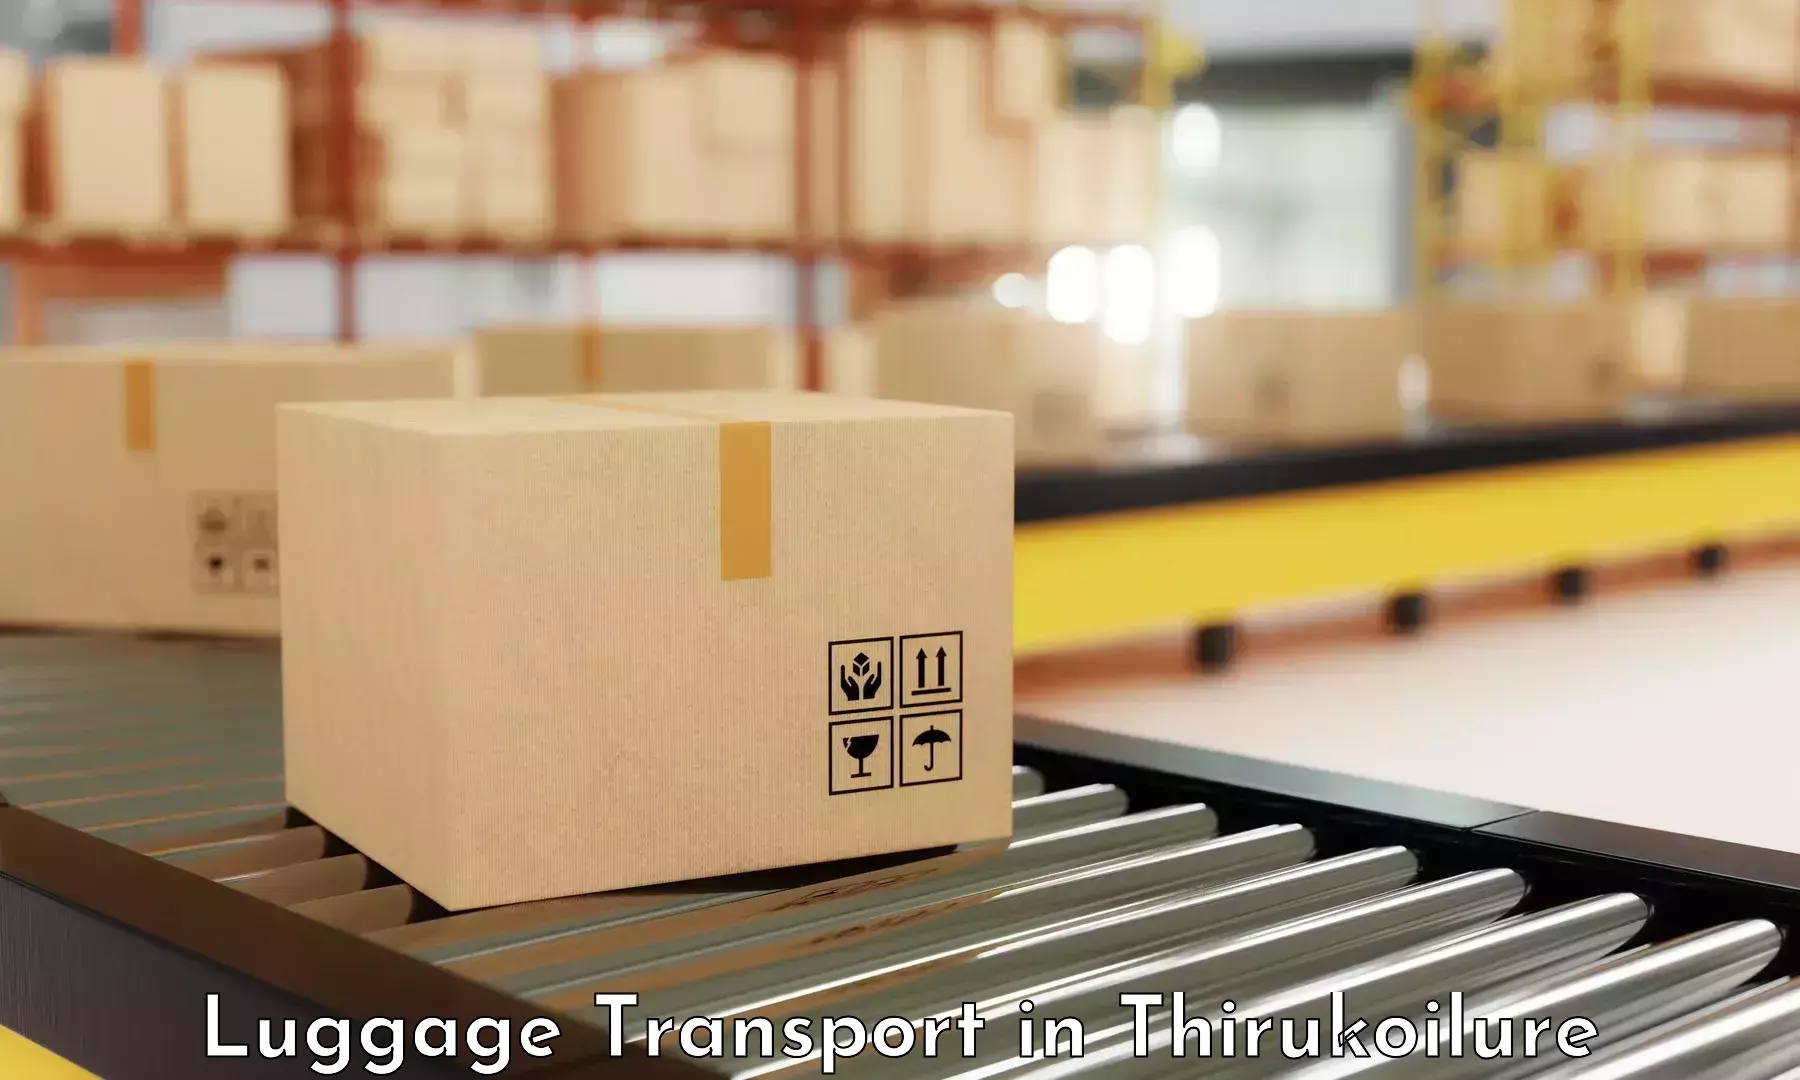 Global baggage shipping in Thirukoilure